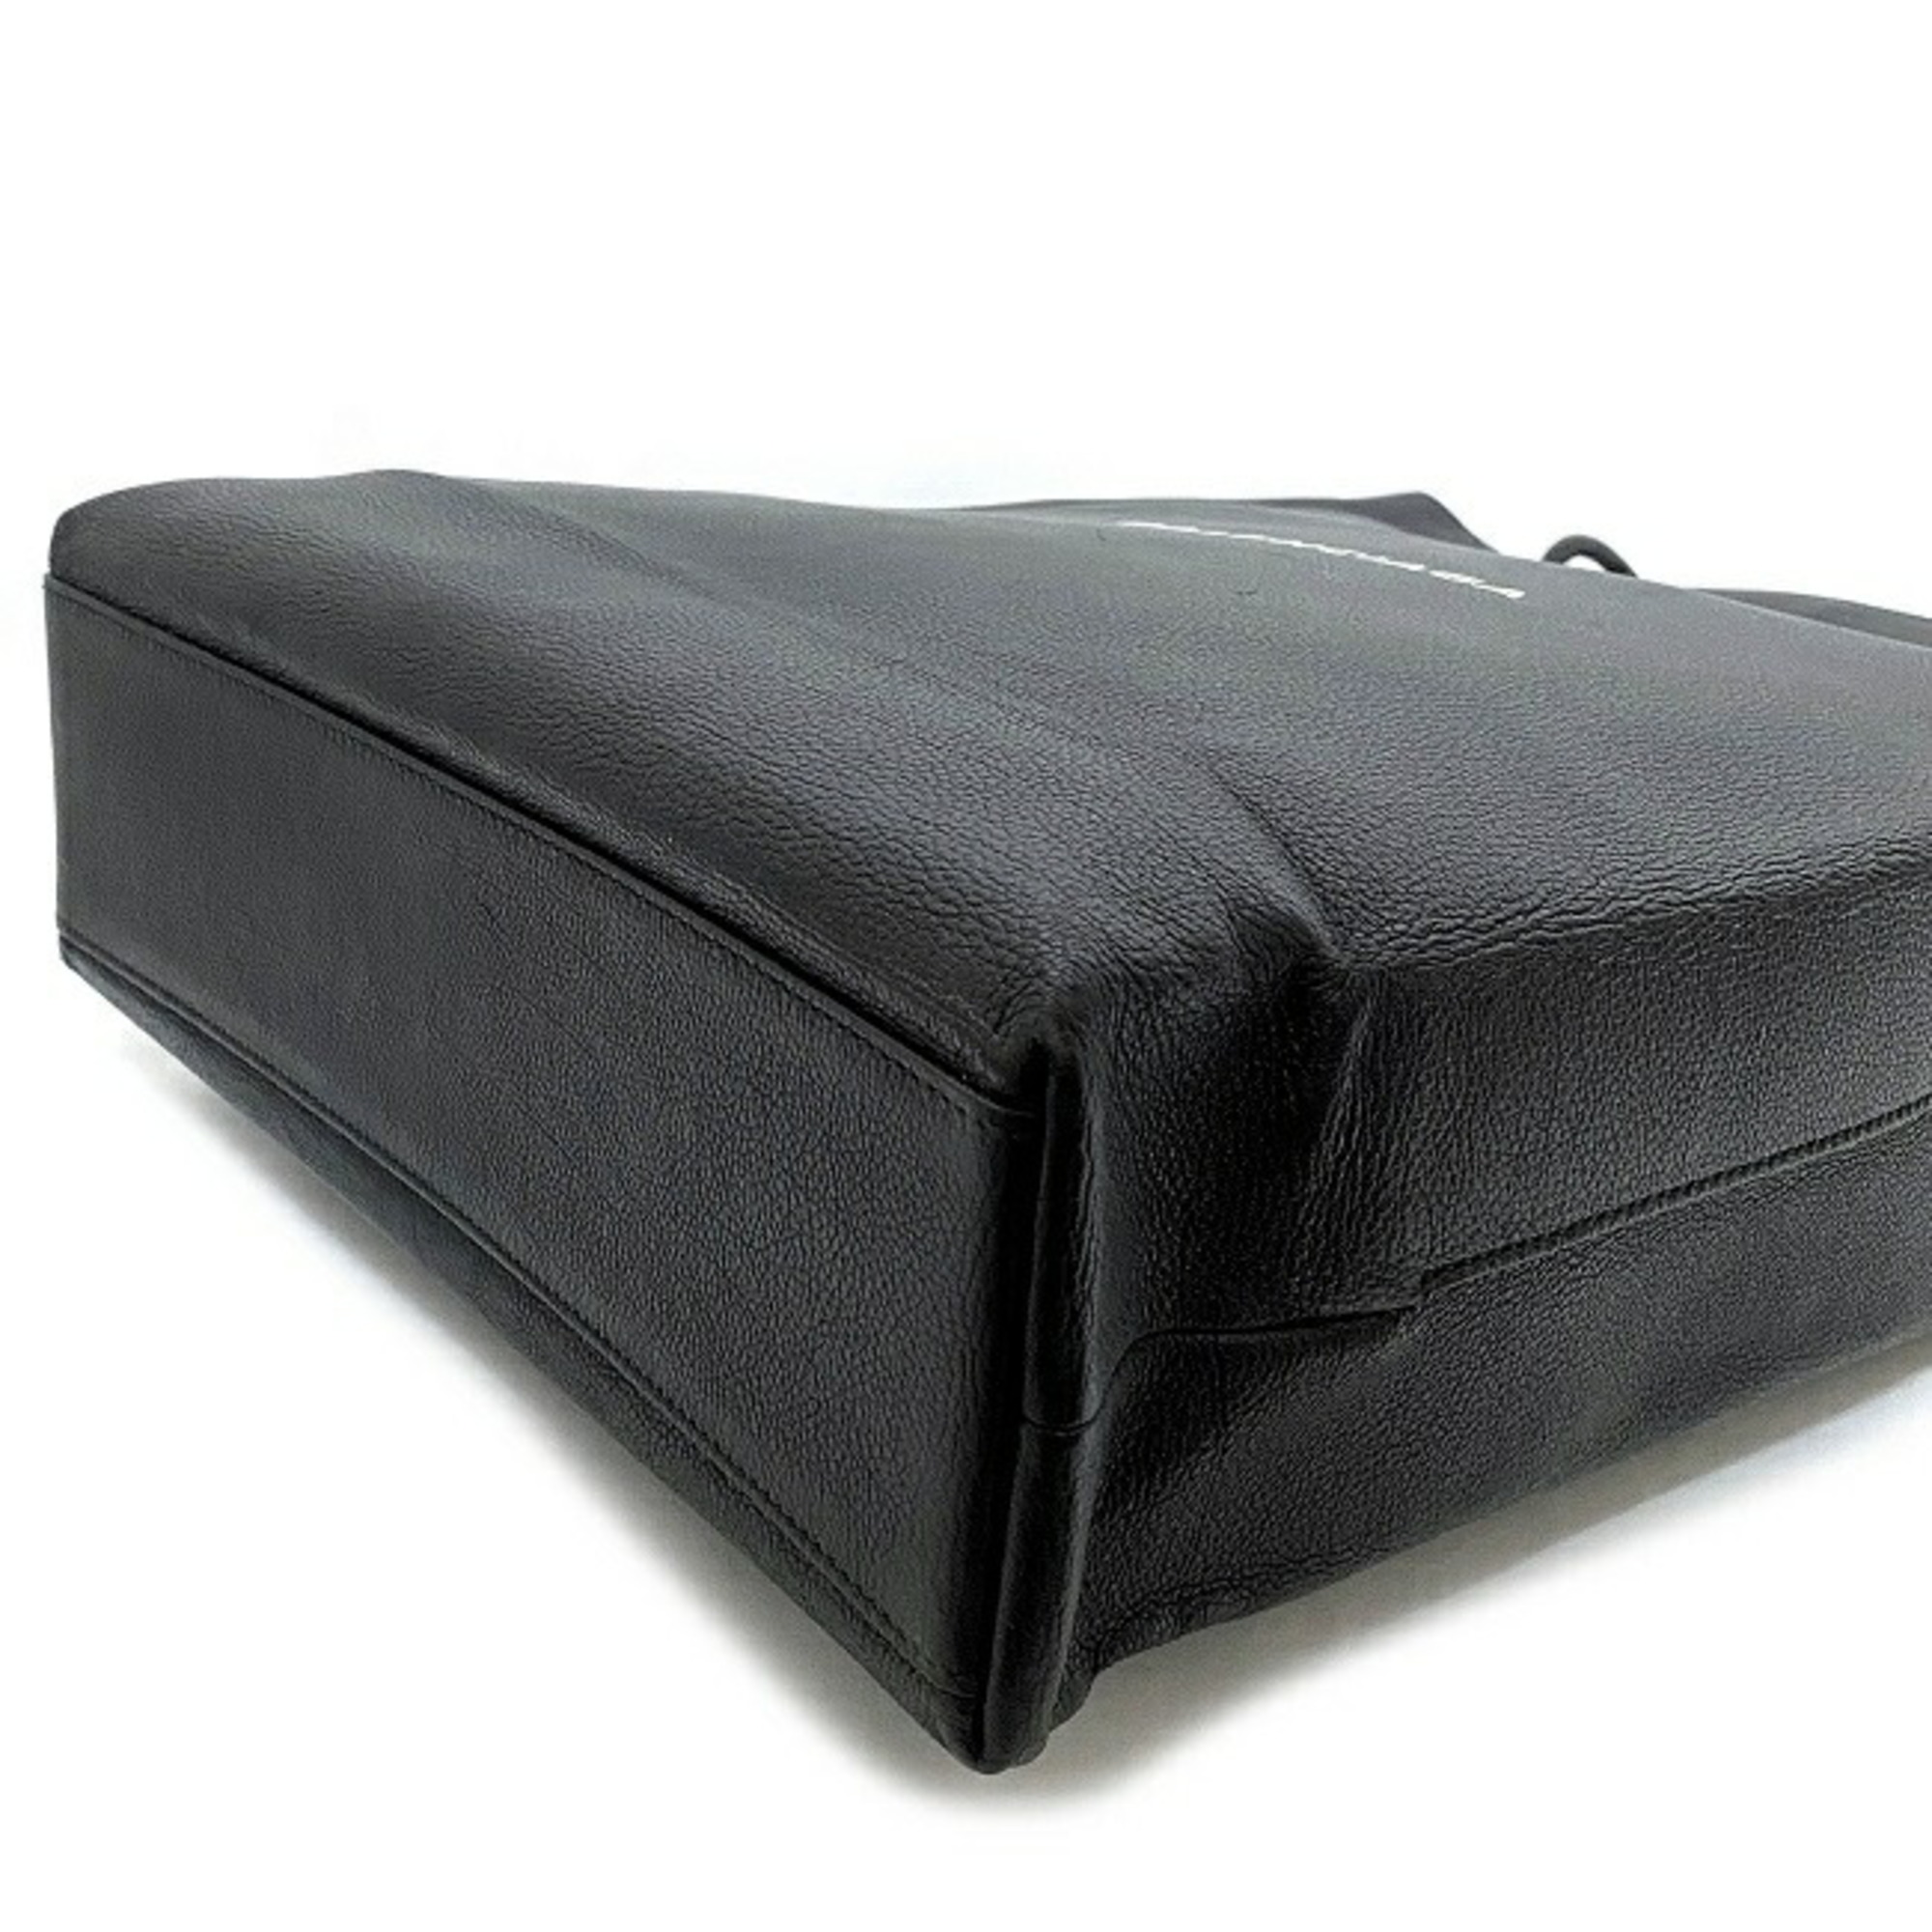 Balenciaga Bag M Black North South 482545 Leather BALENCIAGA Tote Vertical PC